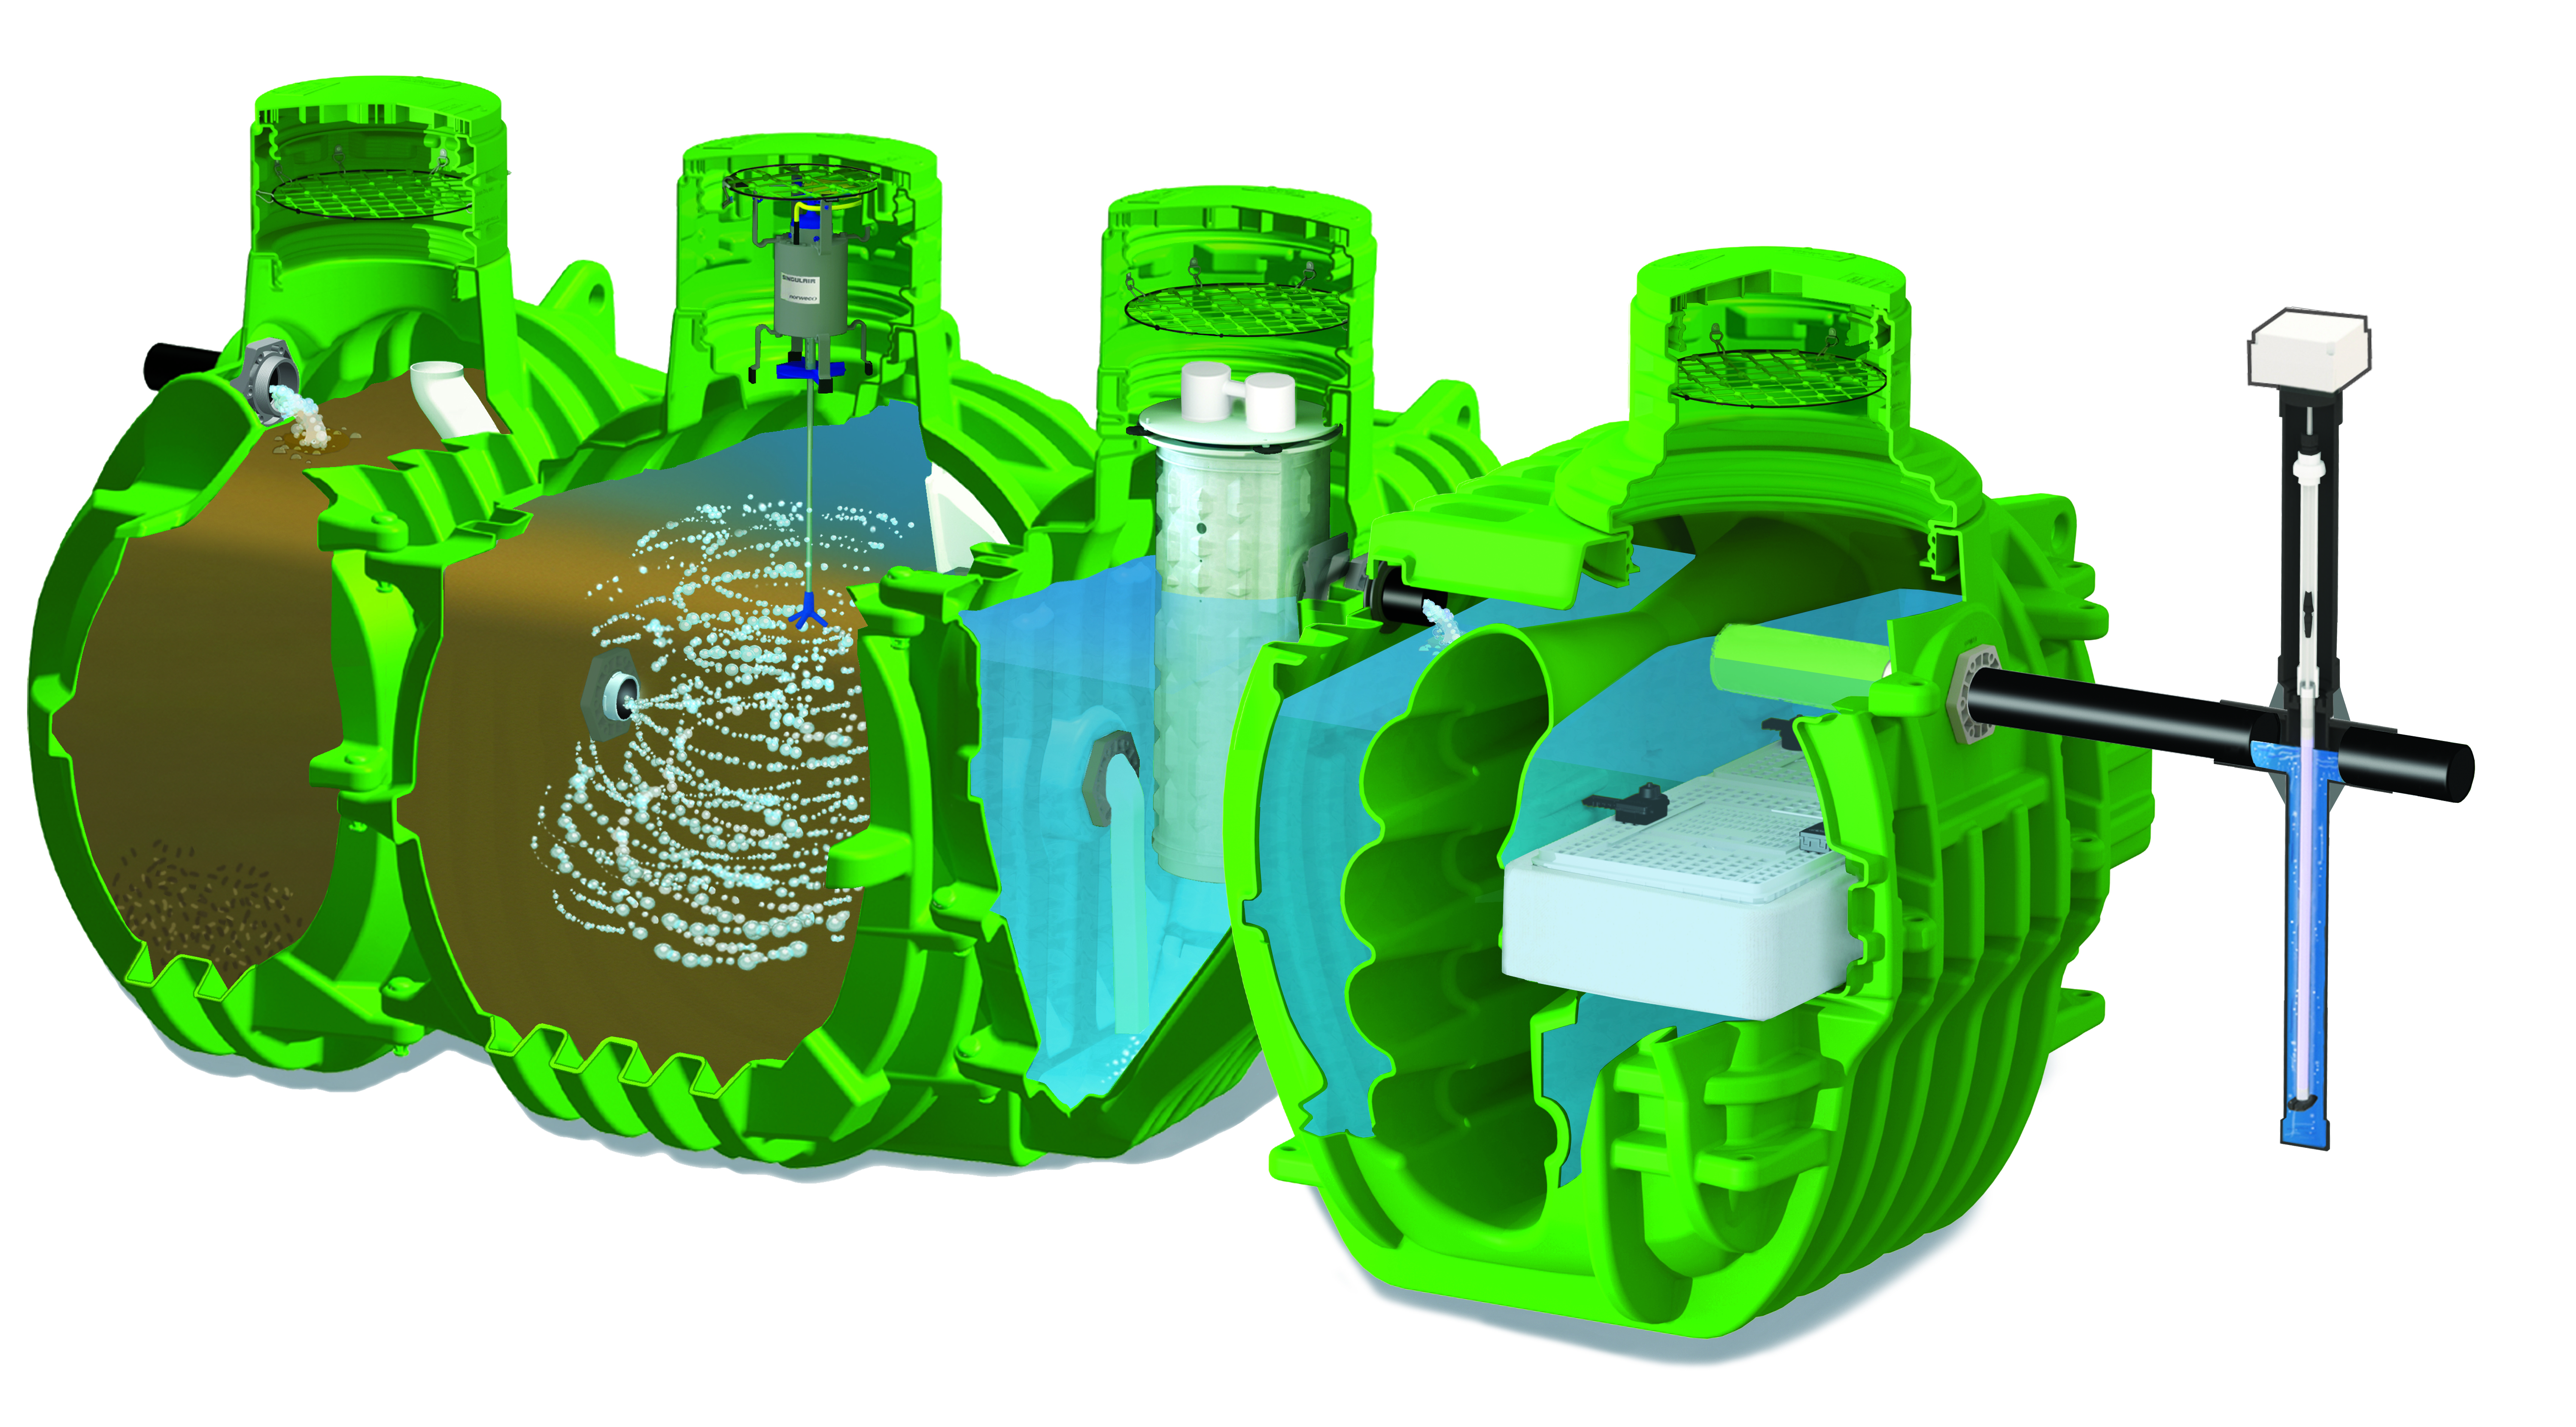 Singulair R3 Green Wastewater Treatment System